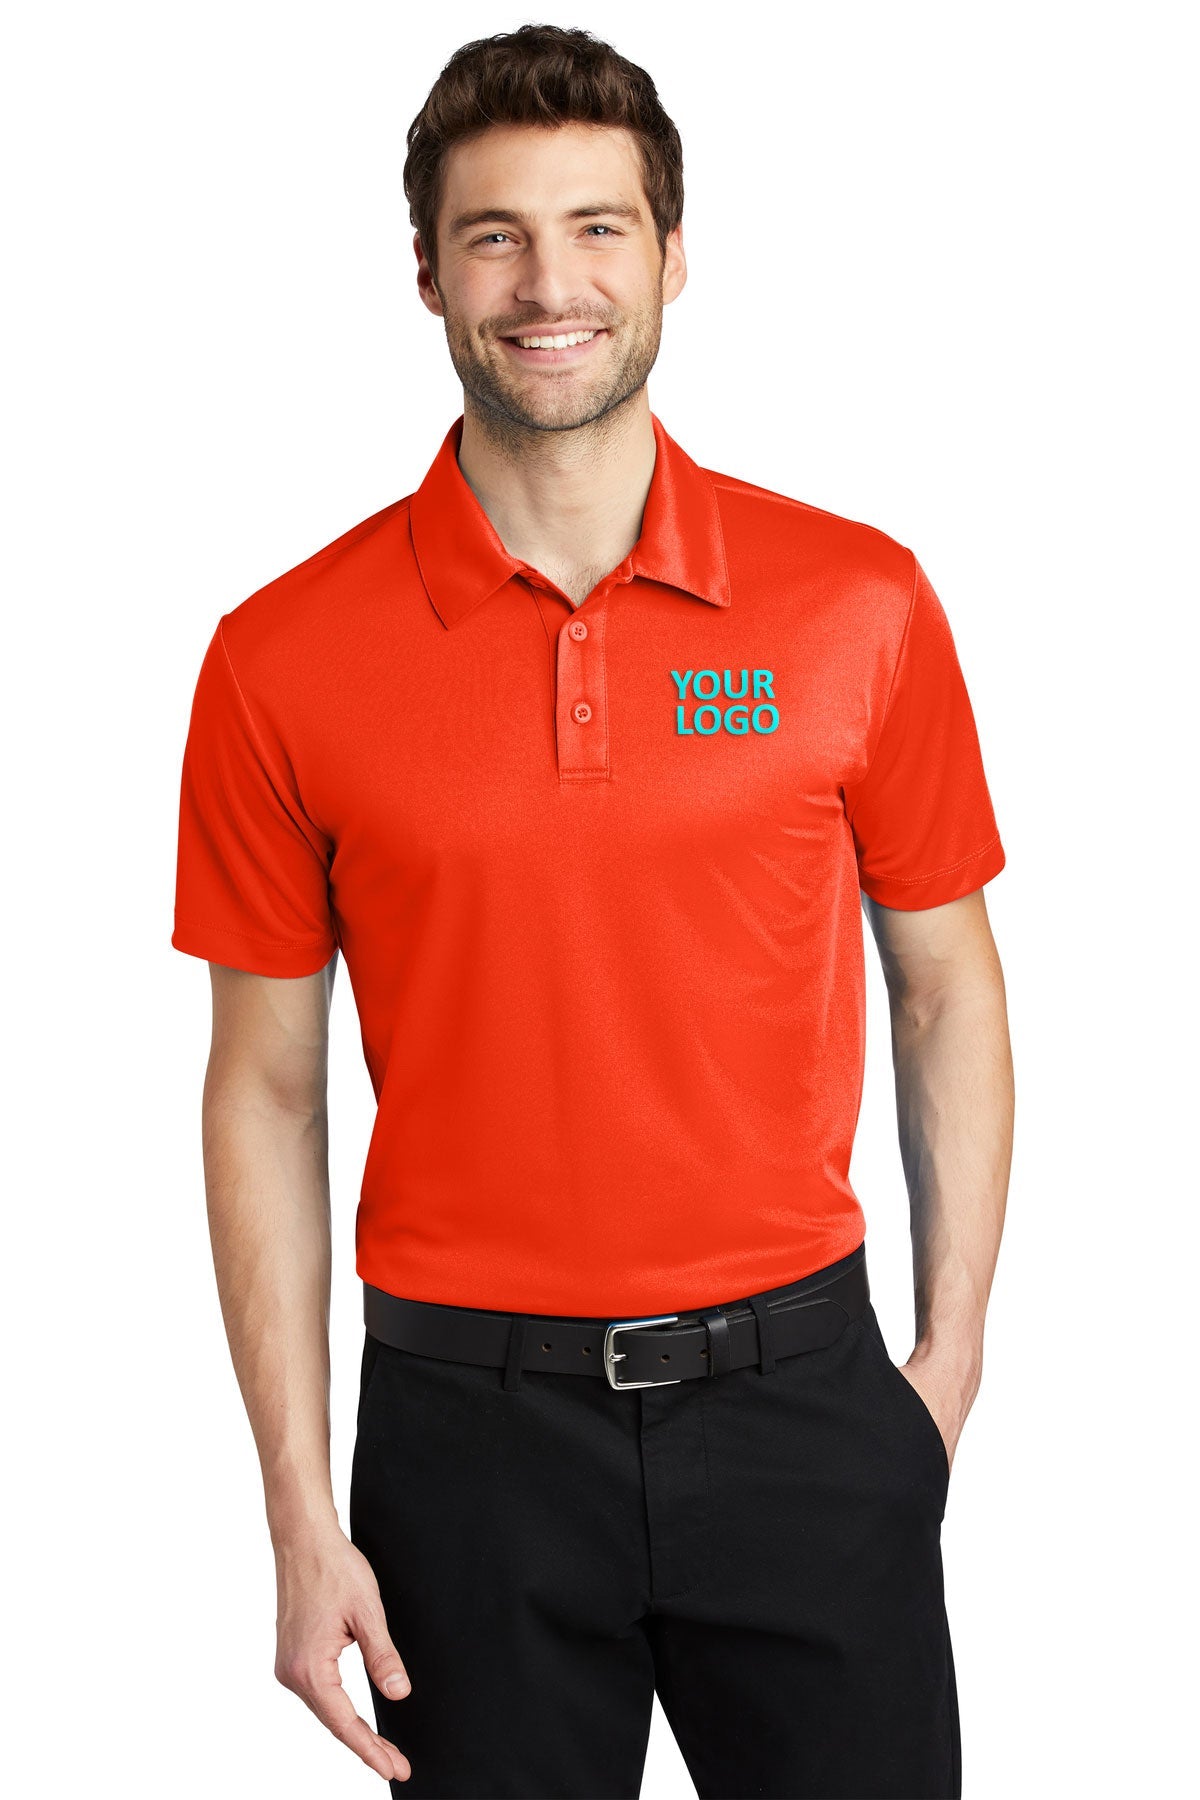 port authority neon orange k540 custom made polo shirts with logo